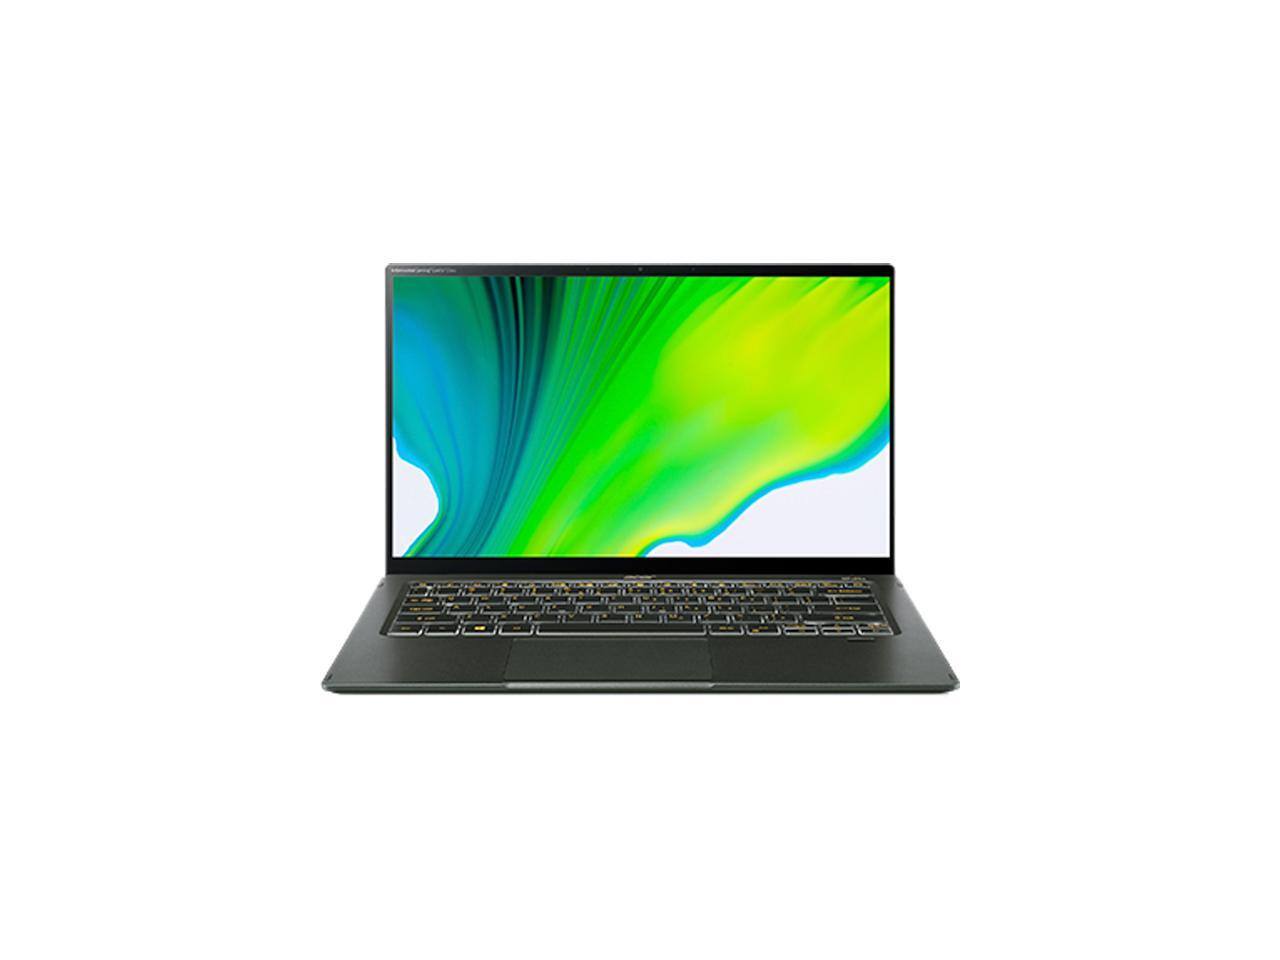 Acer Intel EVO Laptop Swift 5 [i7-1165G7, 16GB RAM, 512GB SSD, 14" IPS Touch Screen] for $859.99 w/ FS